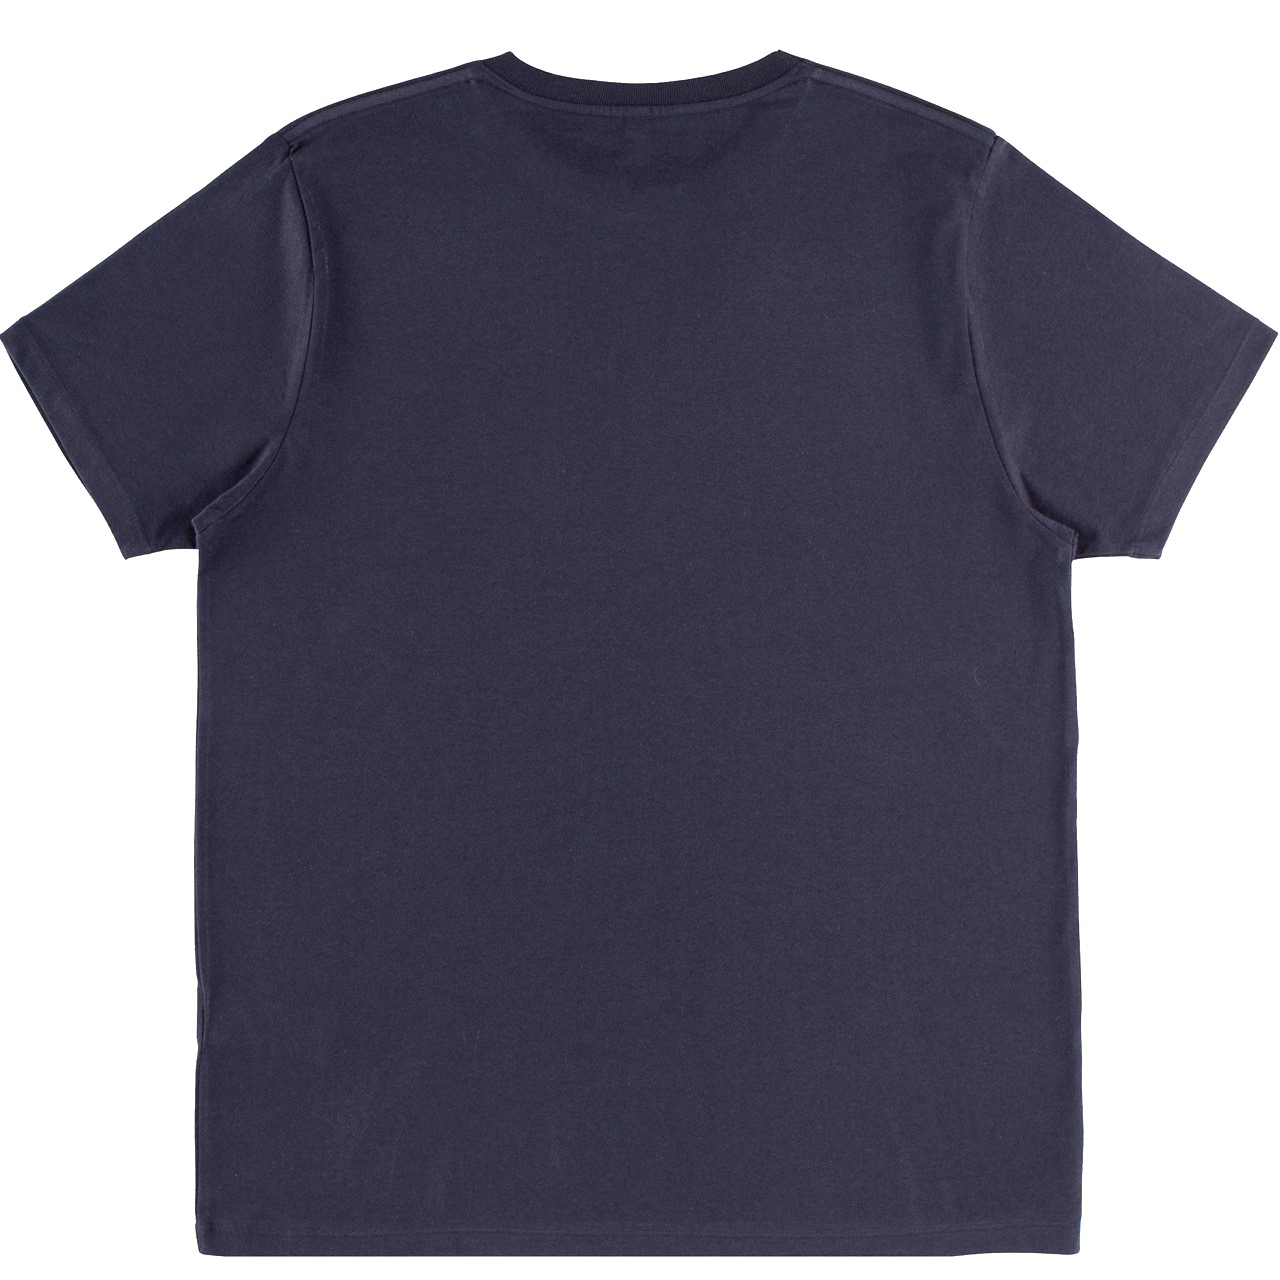 Camiseta azul marino manga corta algodón ogánico - Holocene Classics Espalda